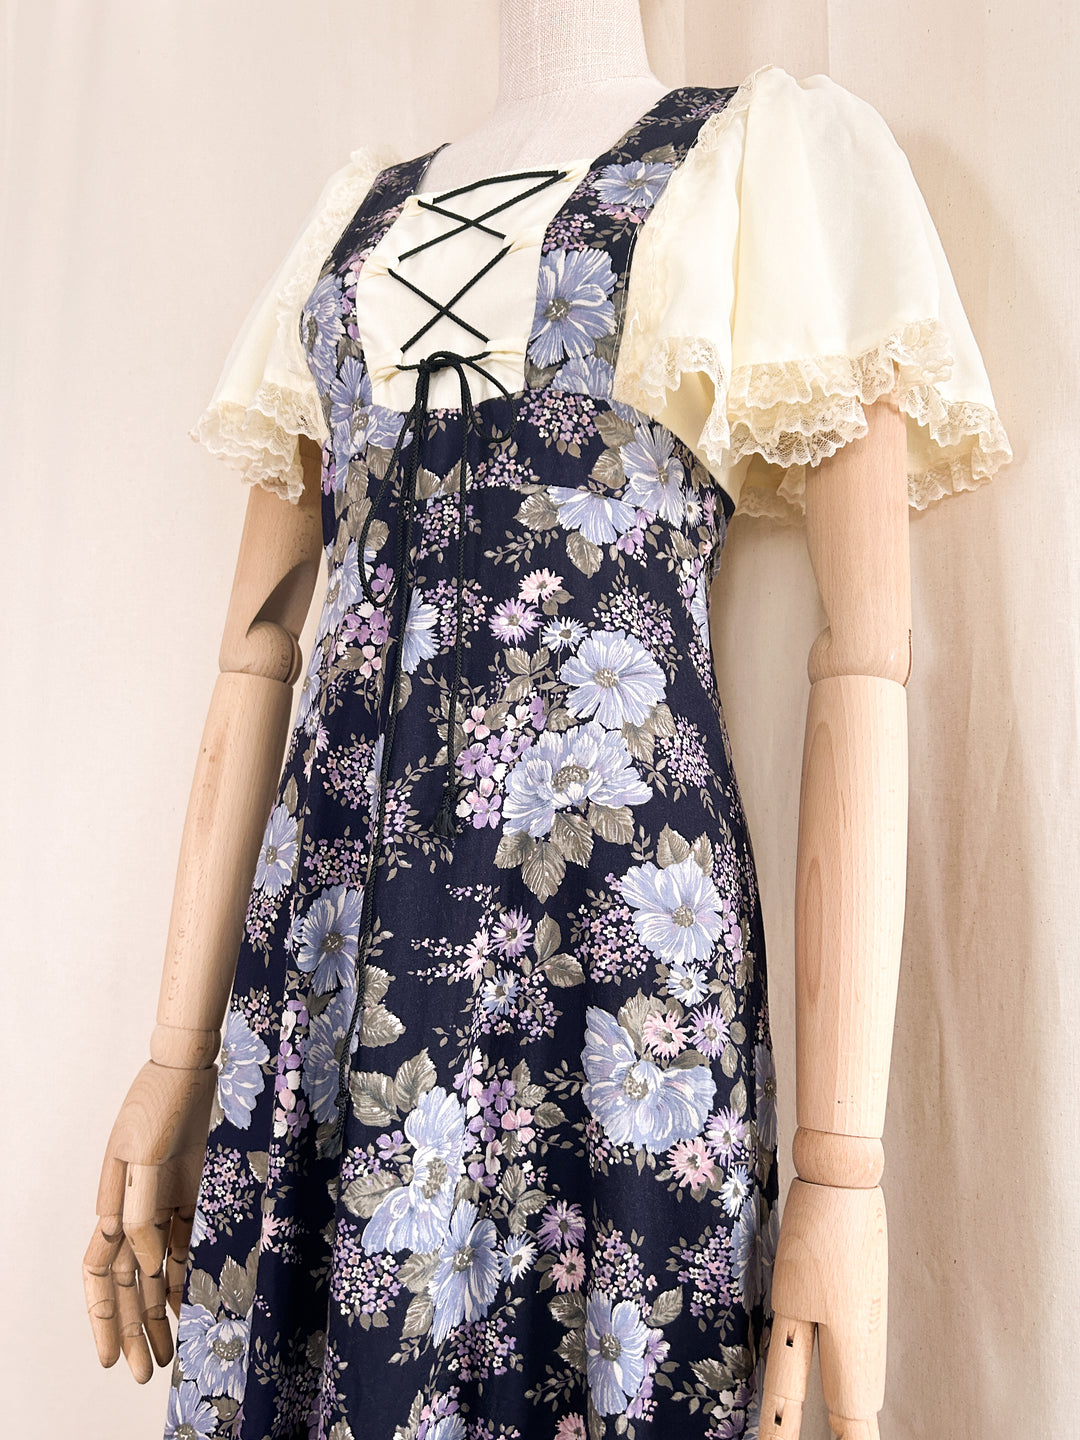 Fauna ~ Stunning romantic 1970s cotton prairie dress